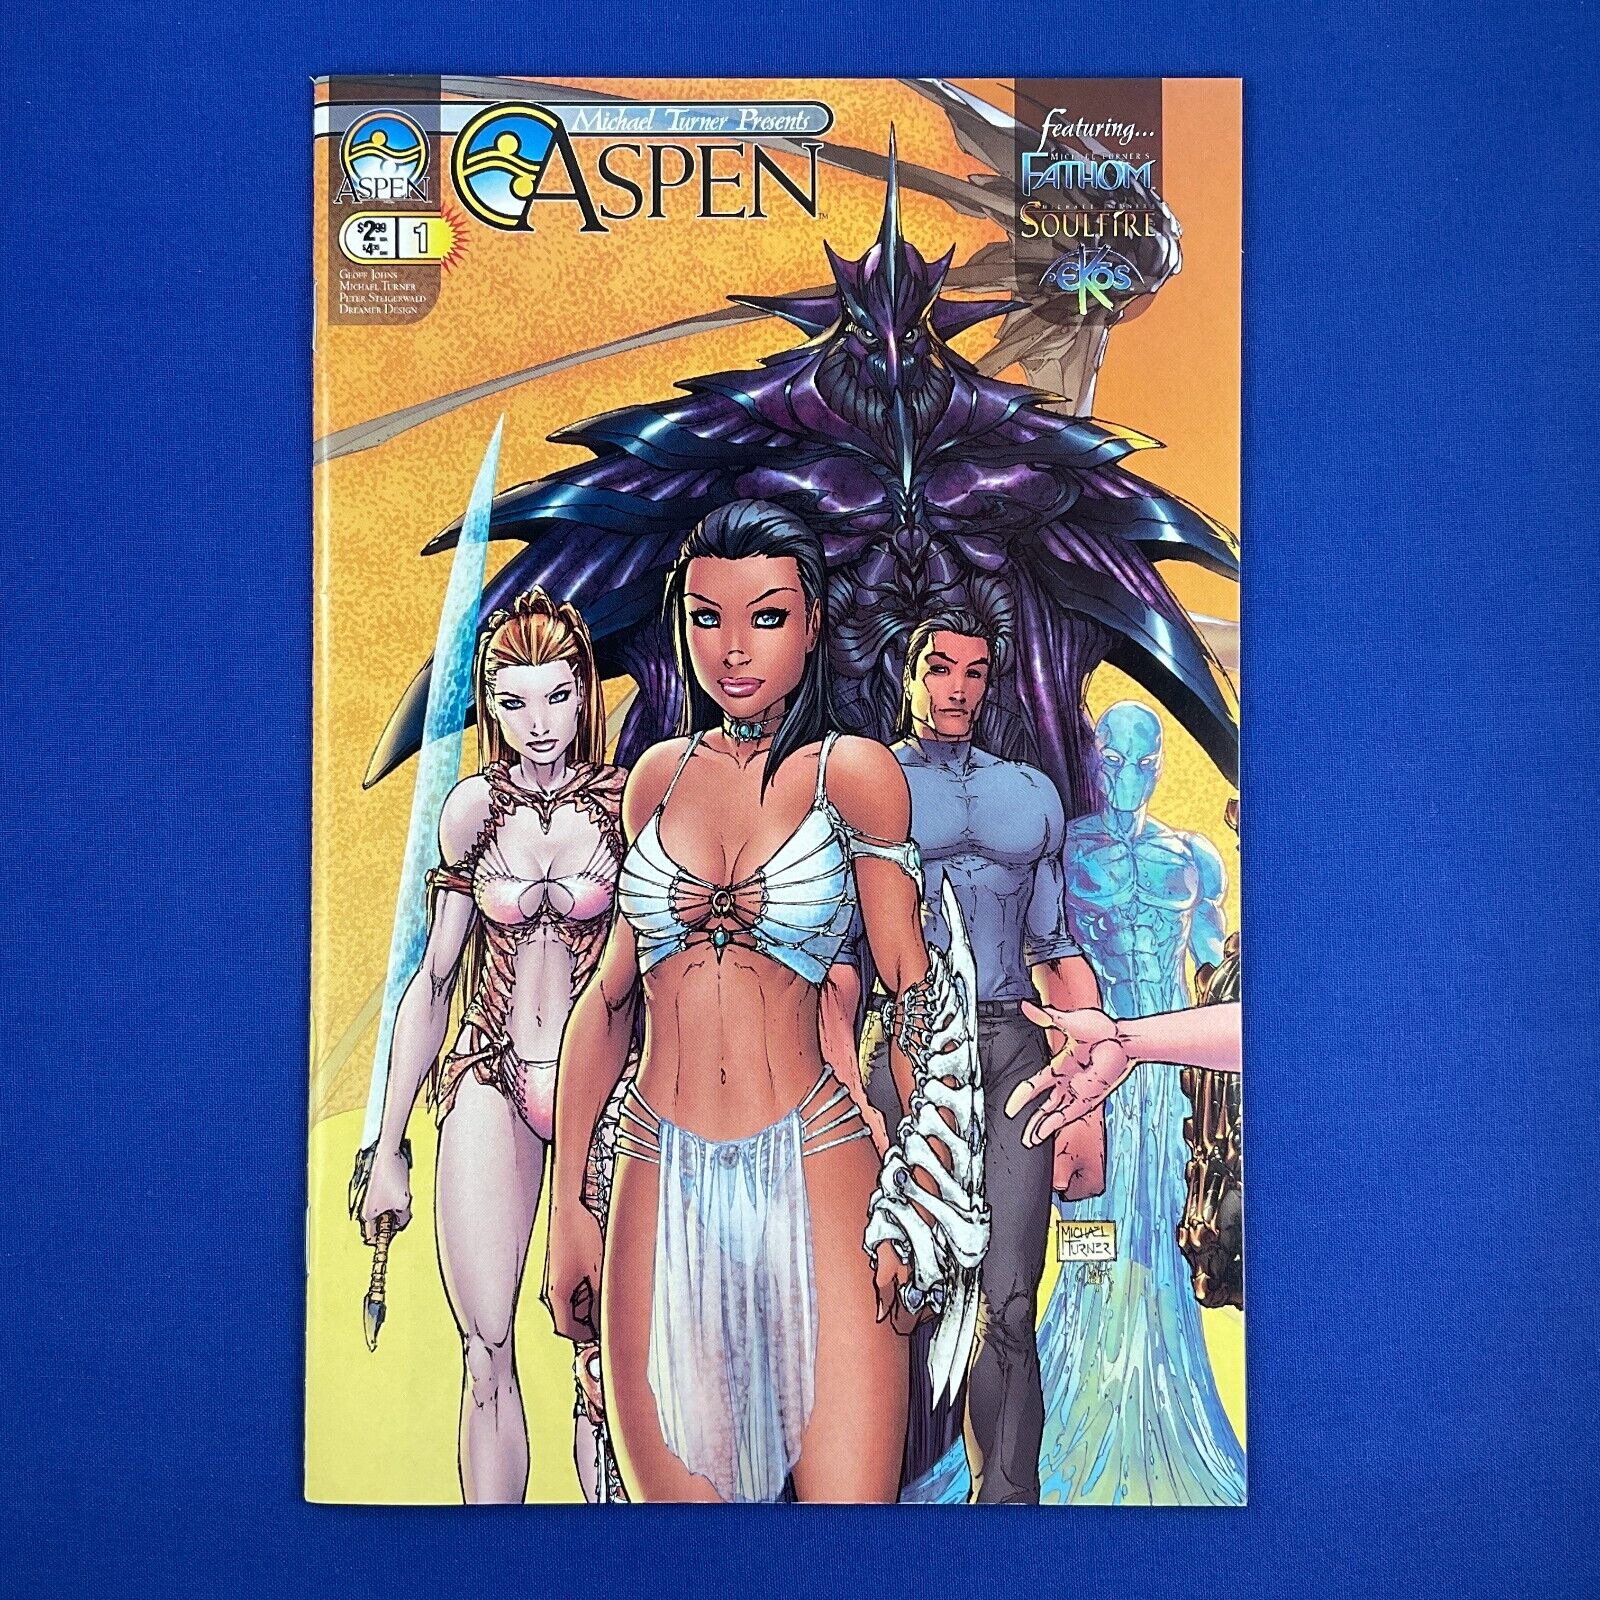 Michael Turner Presents ASPEN #1 Featuring Fathom Soulfire Ekos 2003 Comic Book